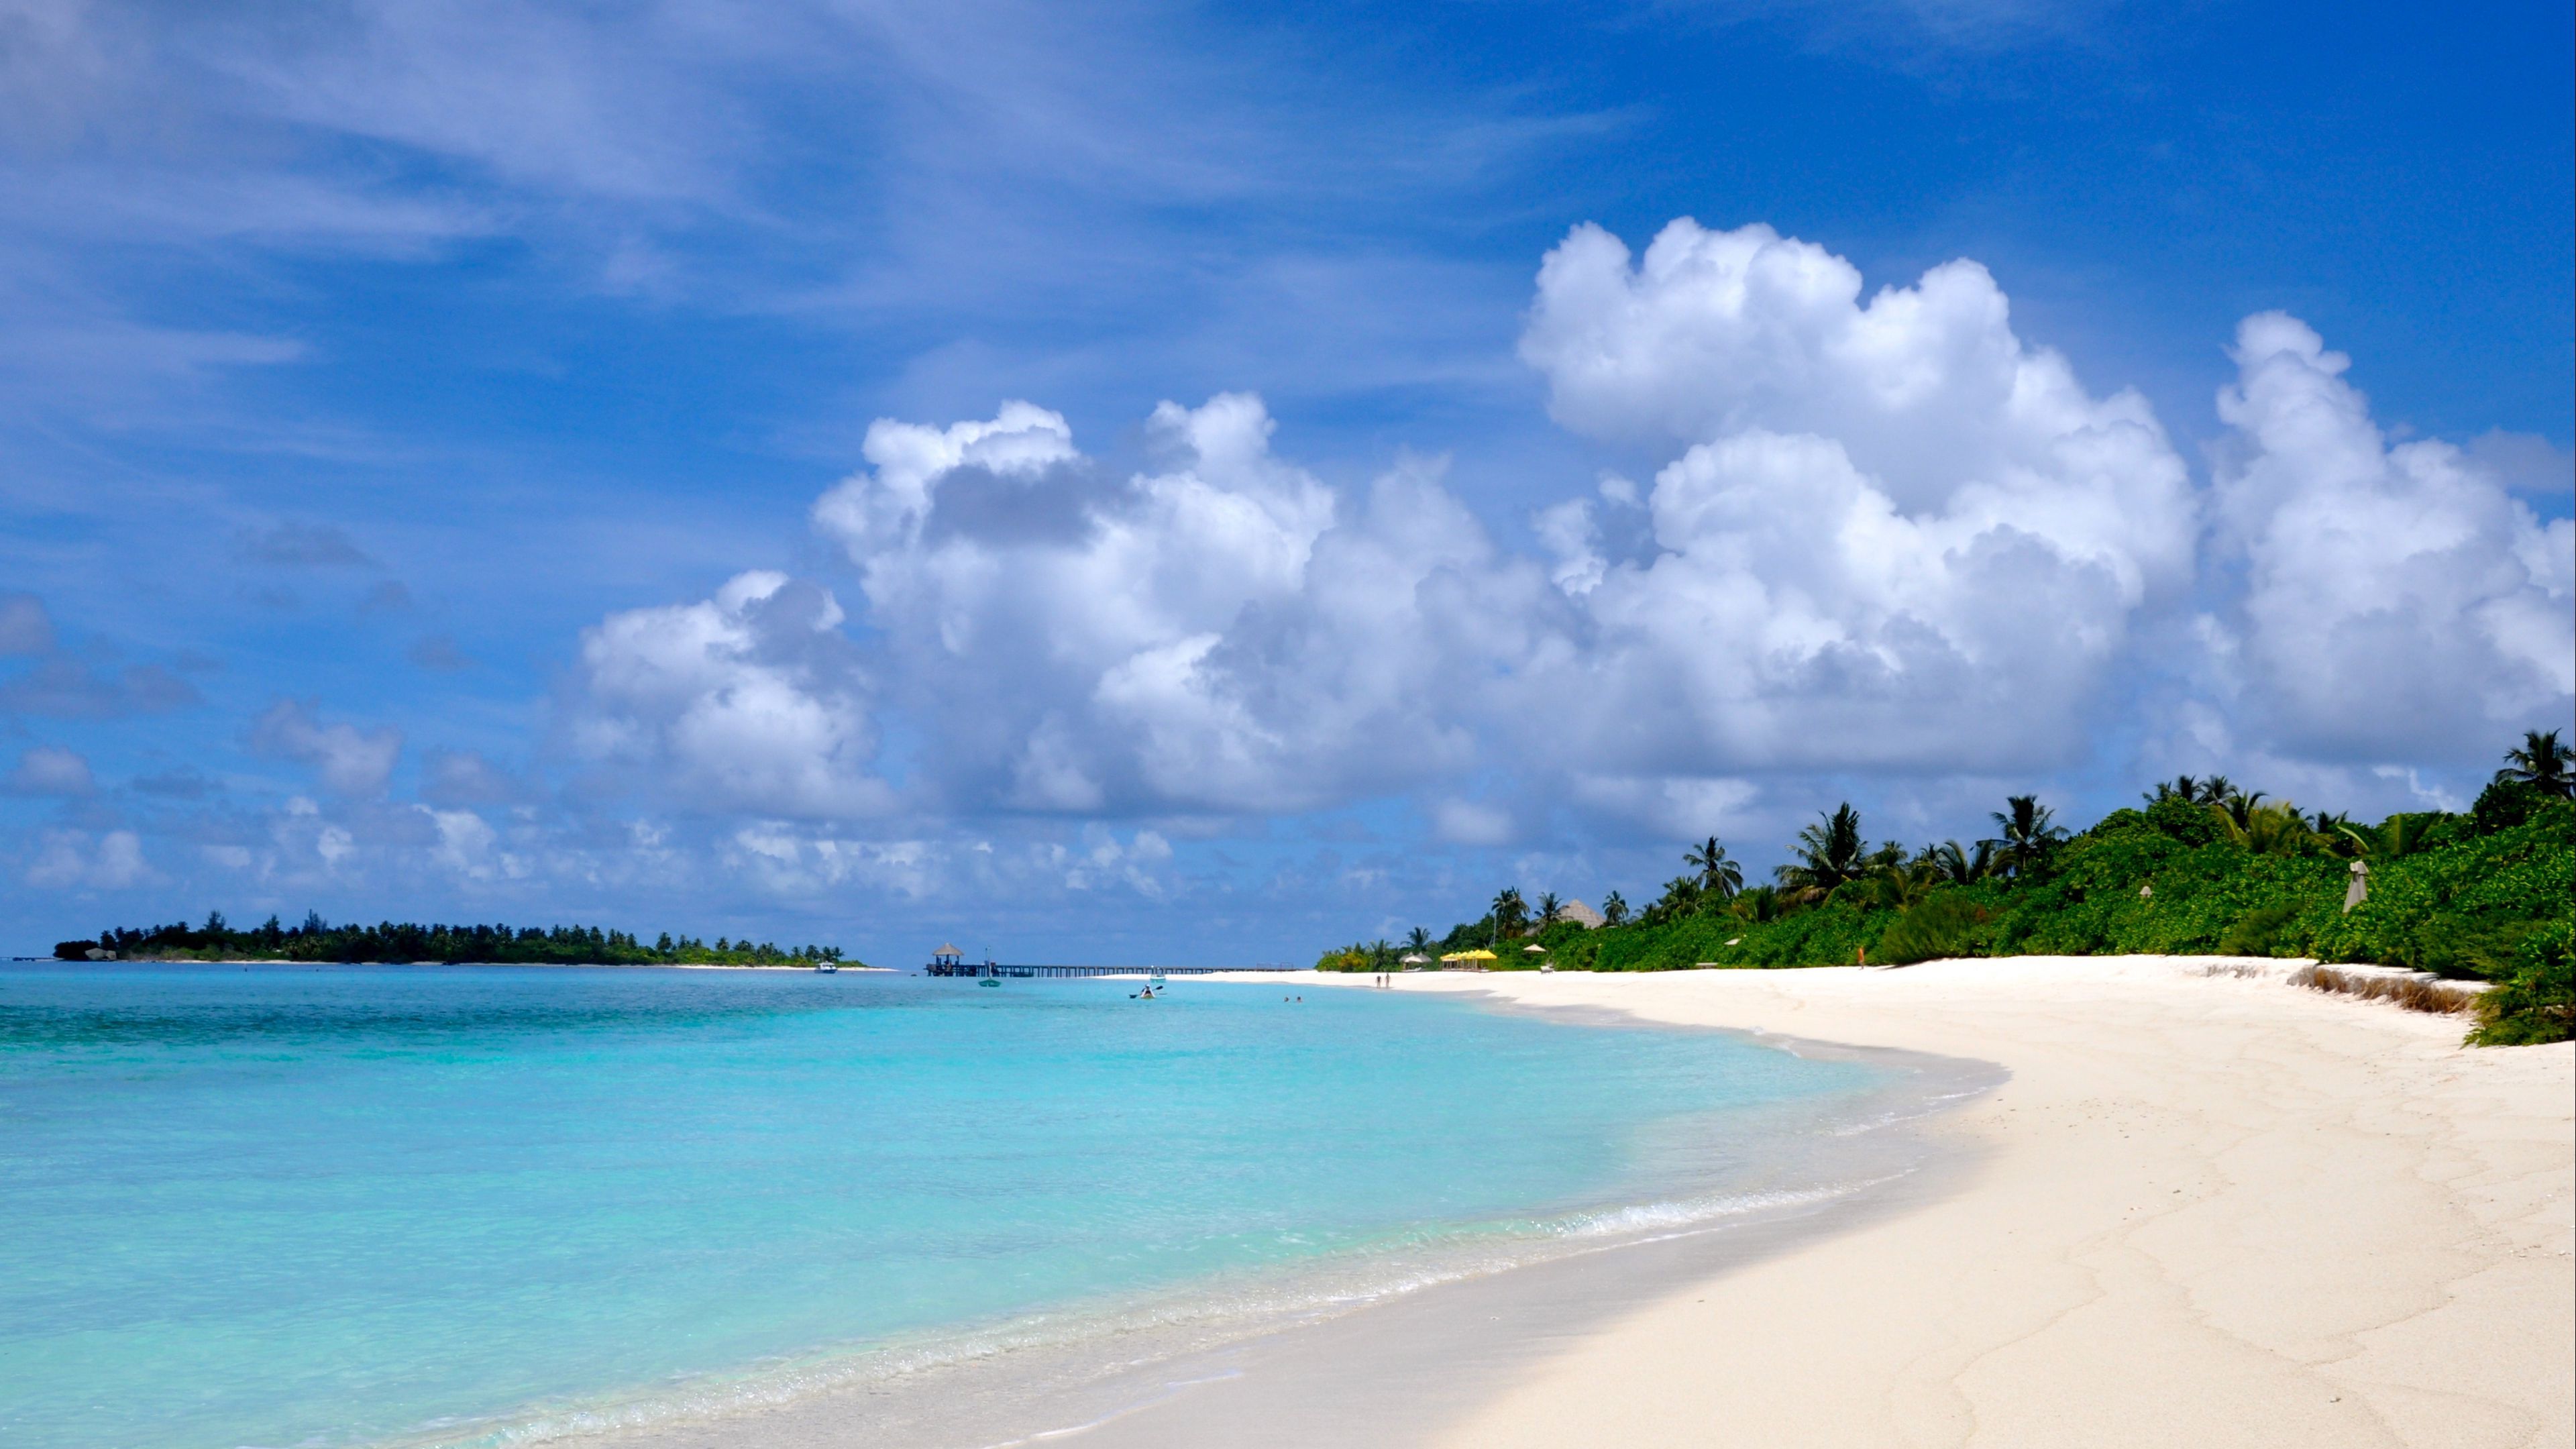 Download wallpaper 3840x2160 maldives, beach, sand, summer 4k uhd 16:9 HD background